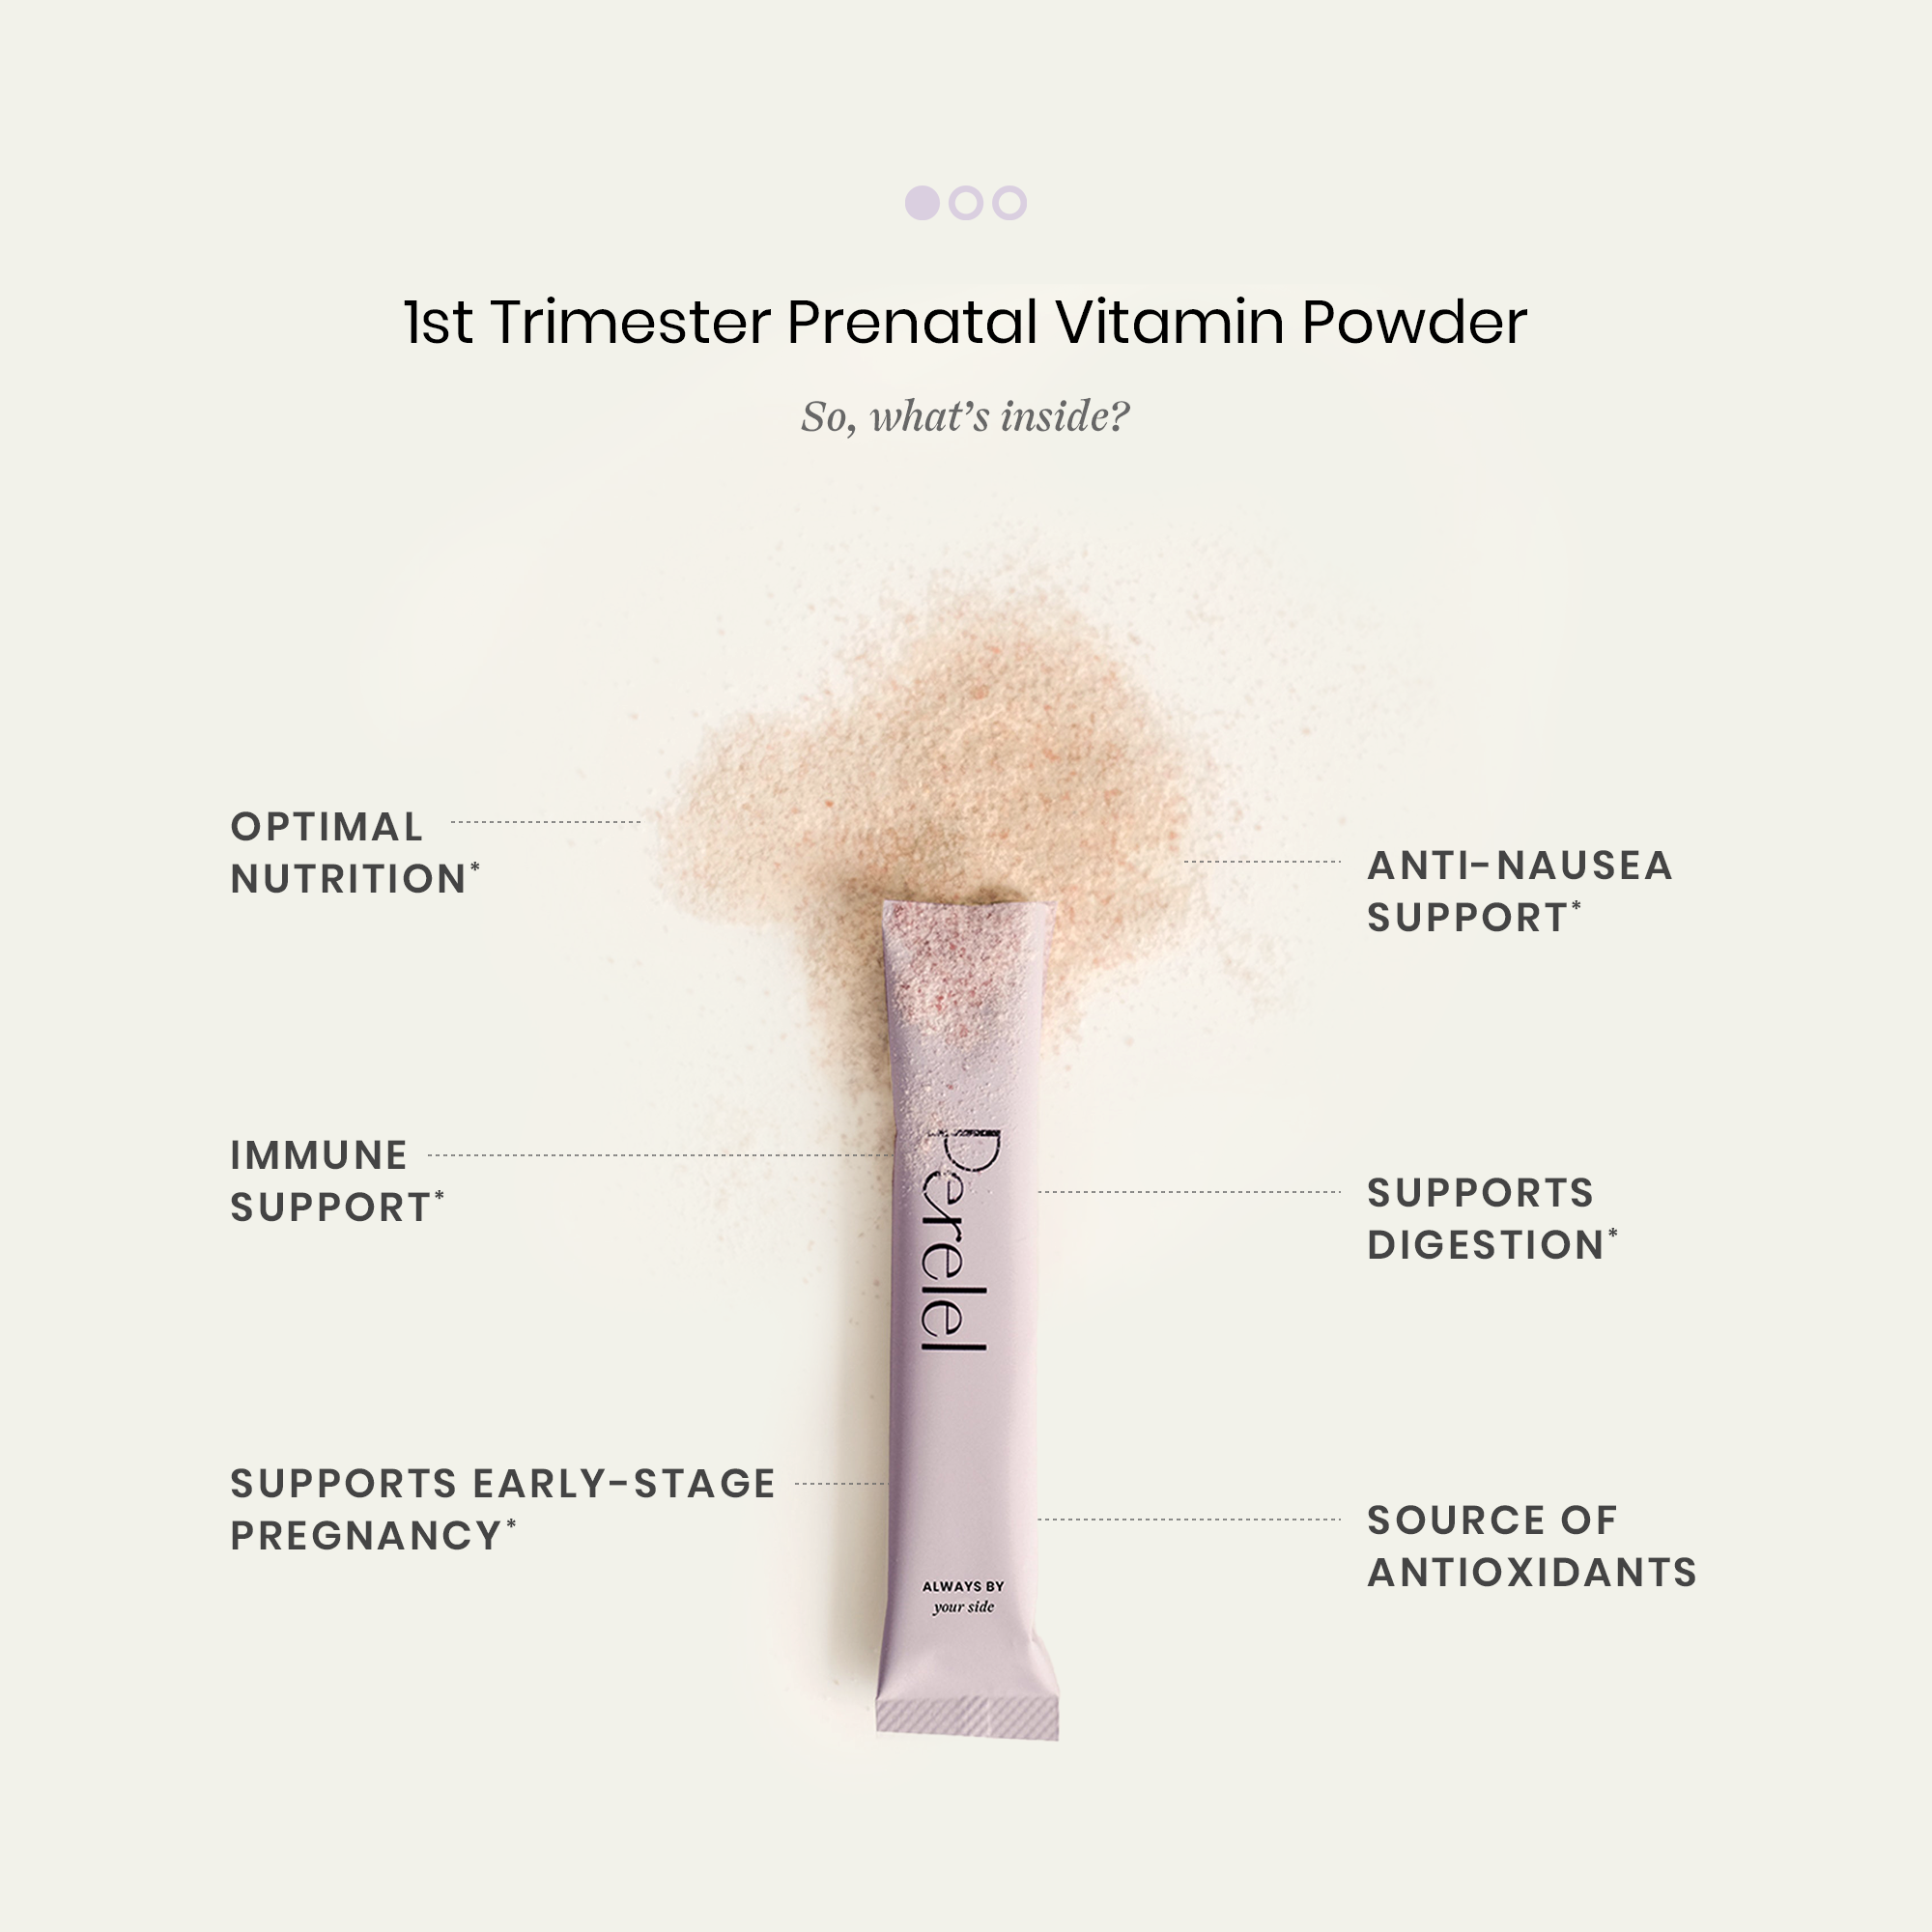 1st Trimester Prenatal Powder ingredient and benefits